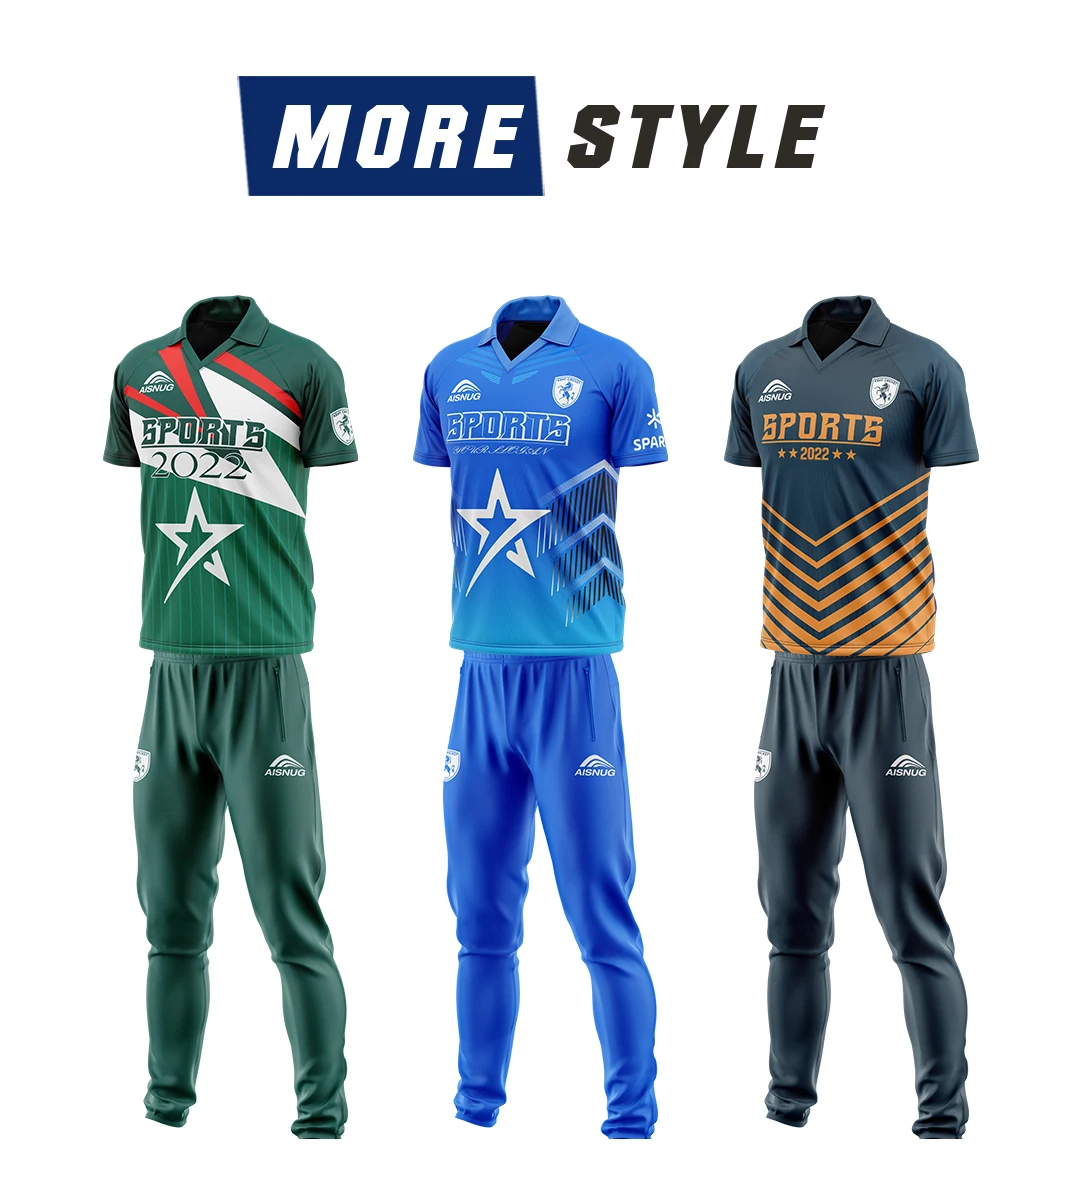 Blue Sublimated Cricket Jerseys Uniforms Long Sleeve - Dubai UAE